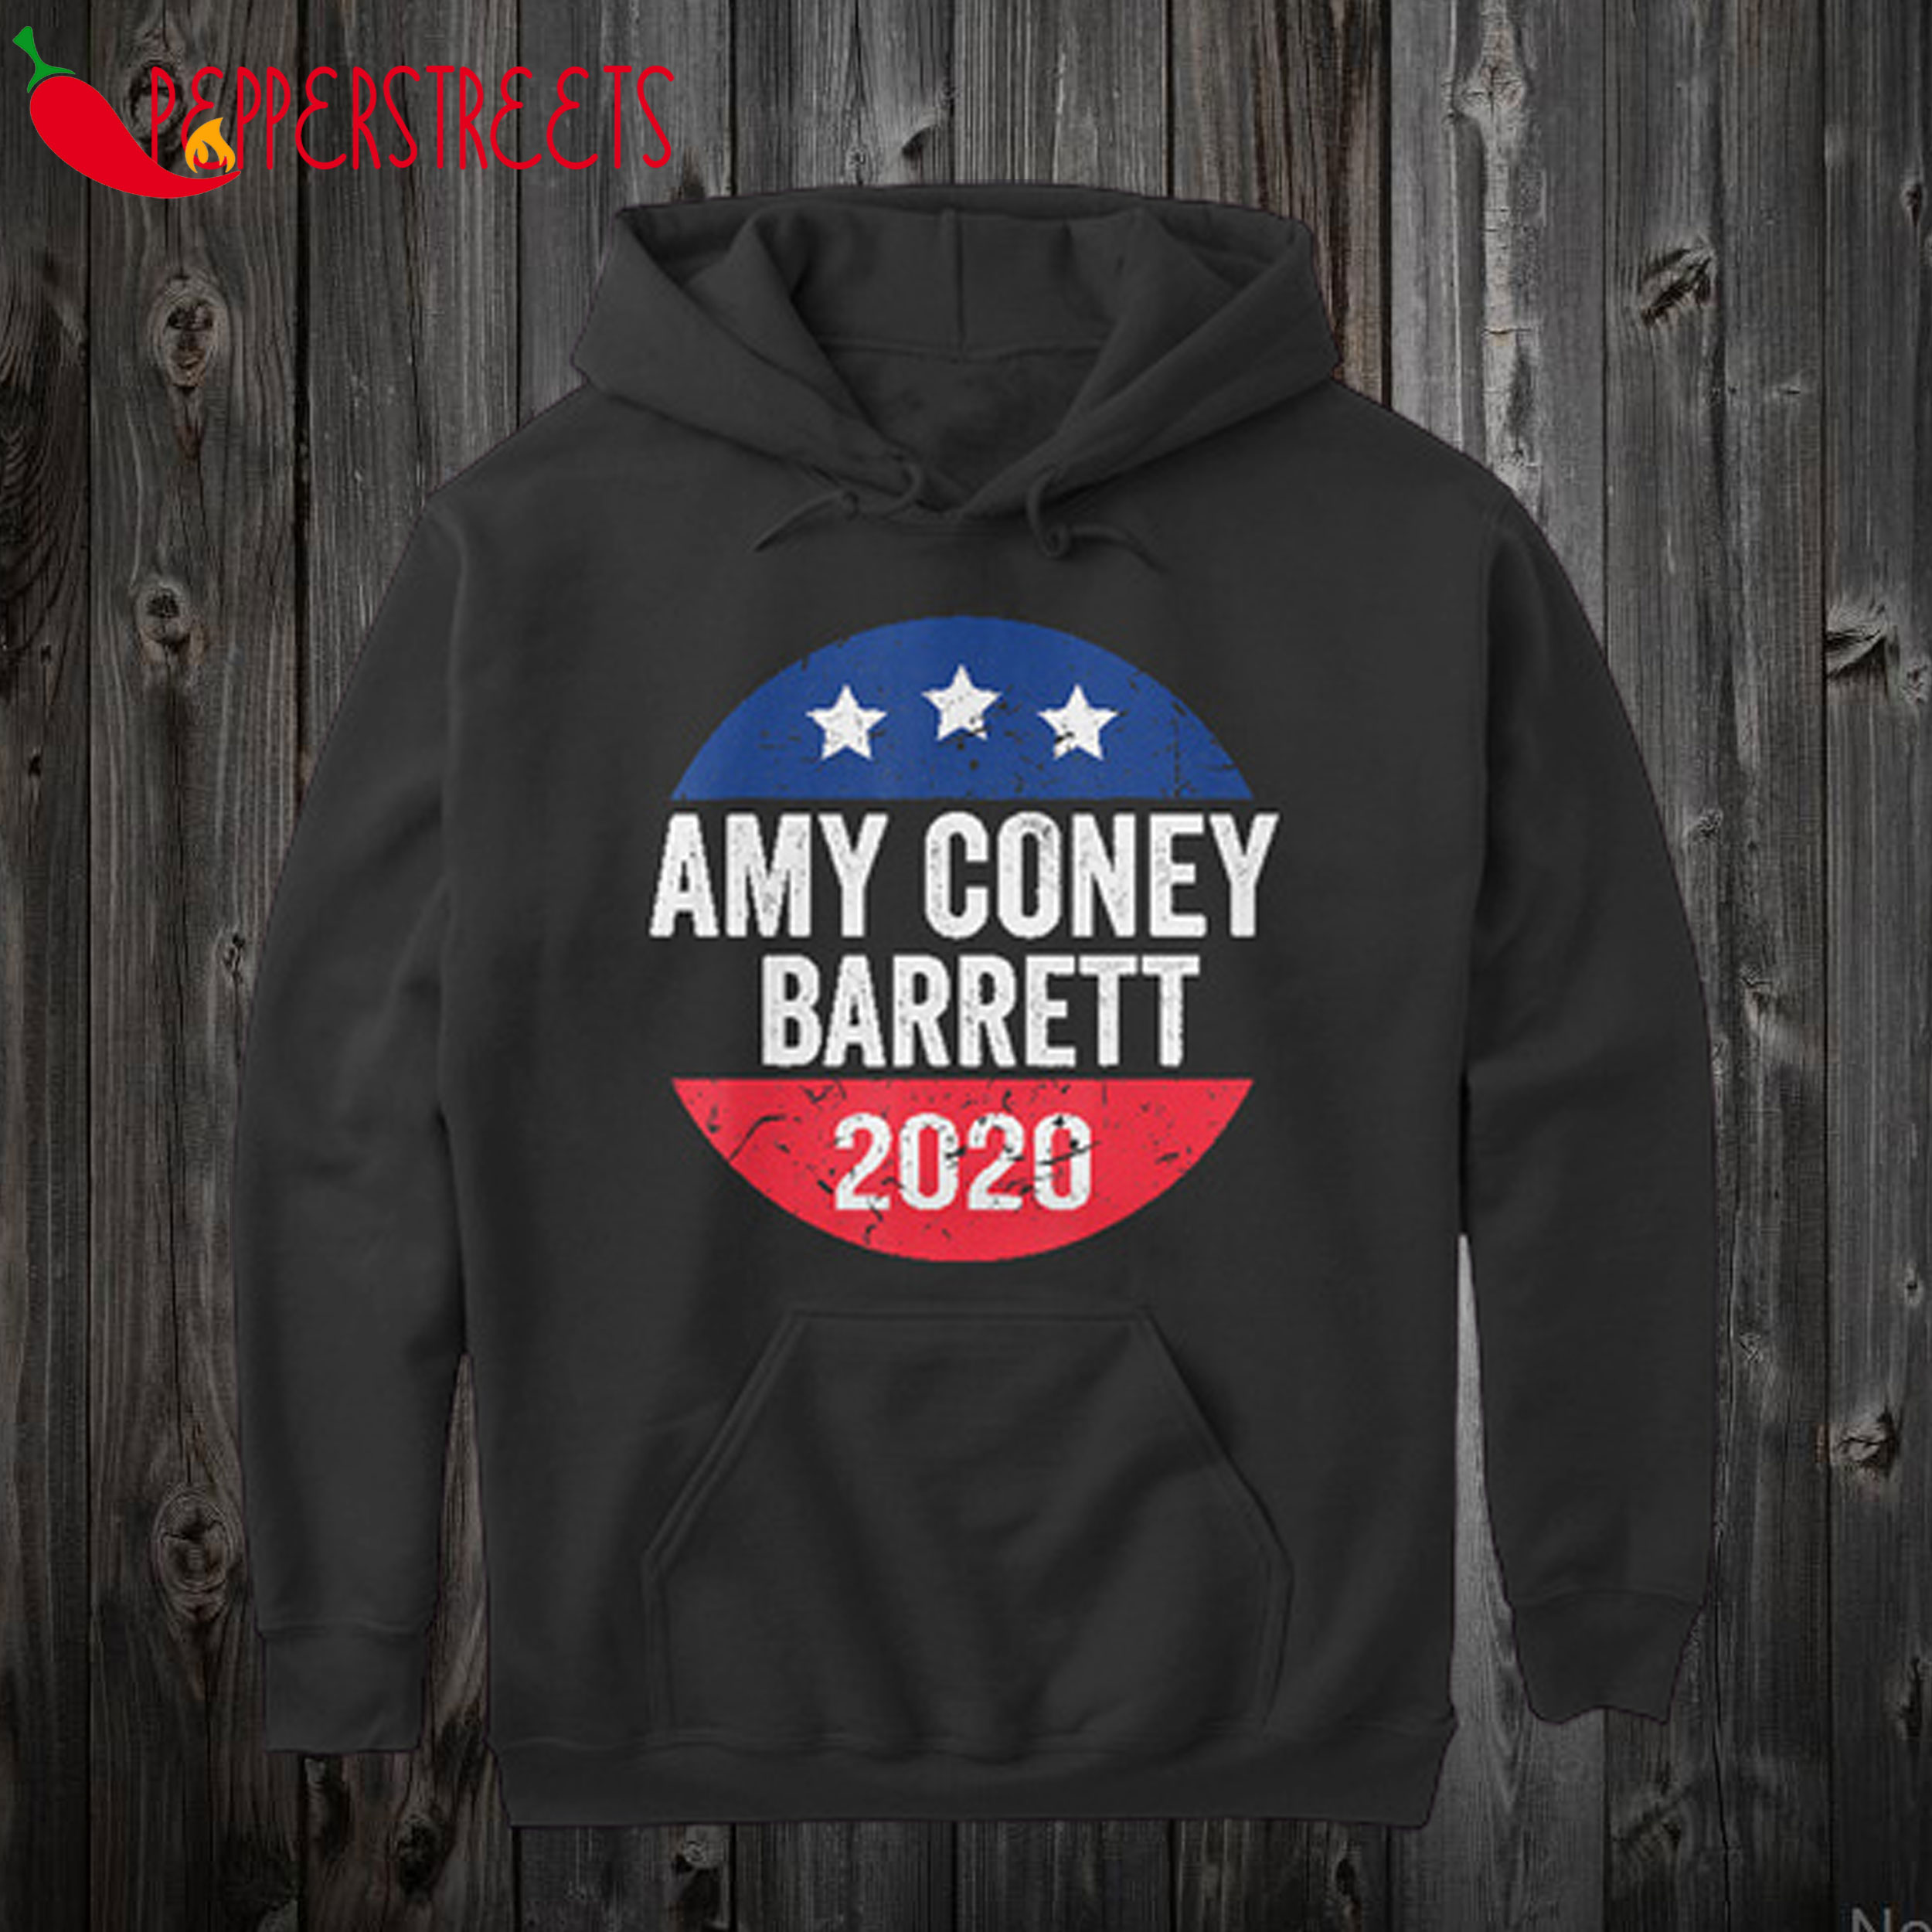 Amy Coney Barrett 2020 fill seat Hoodie